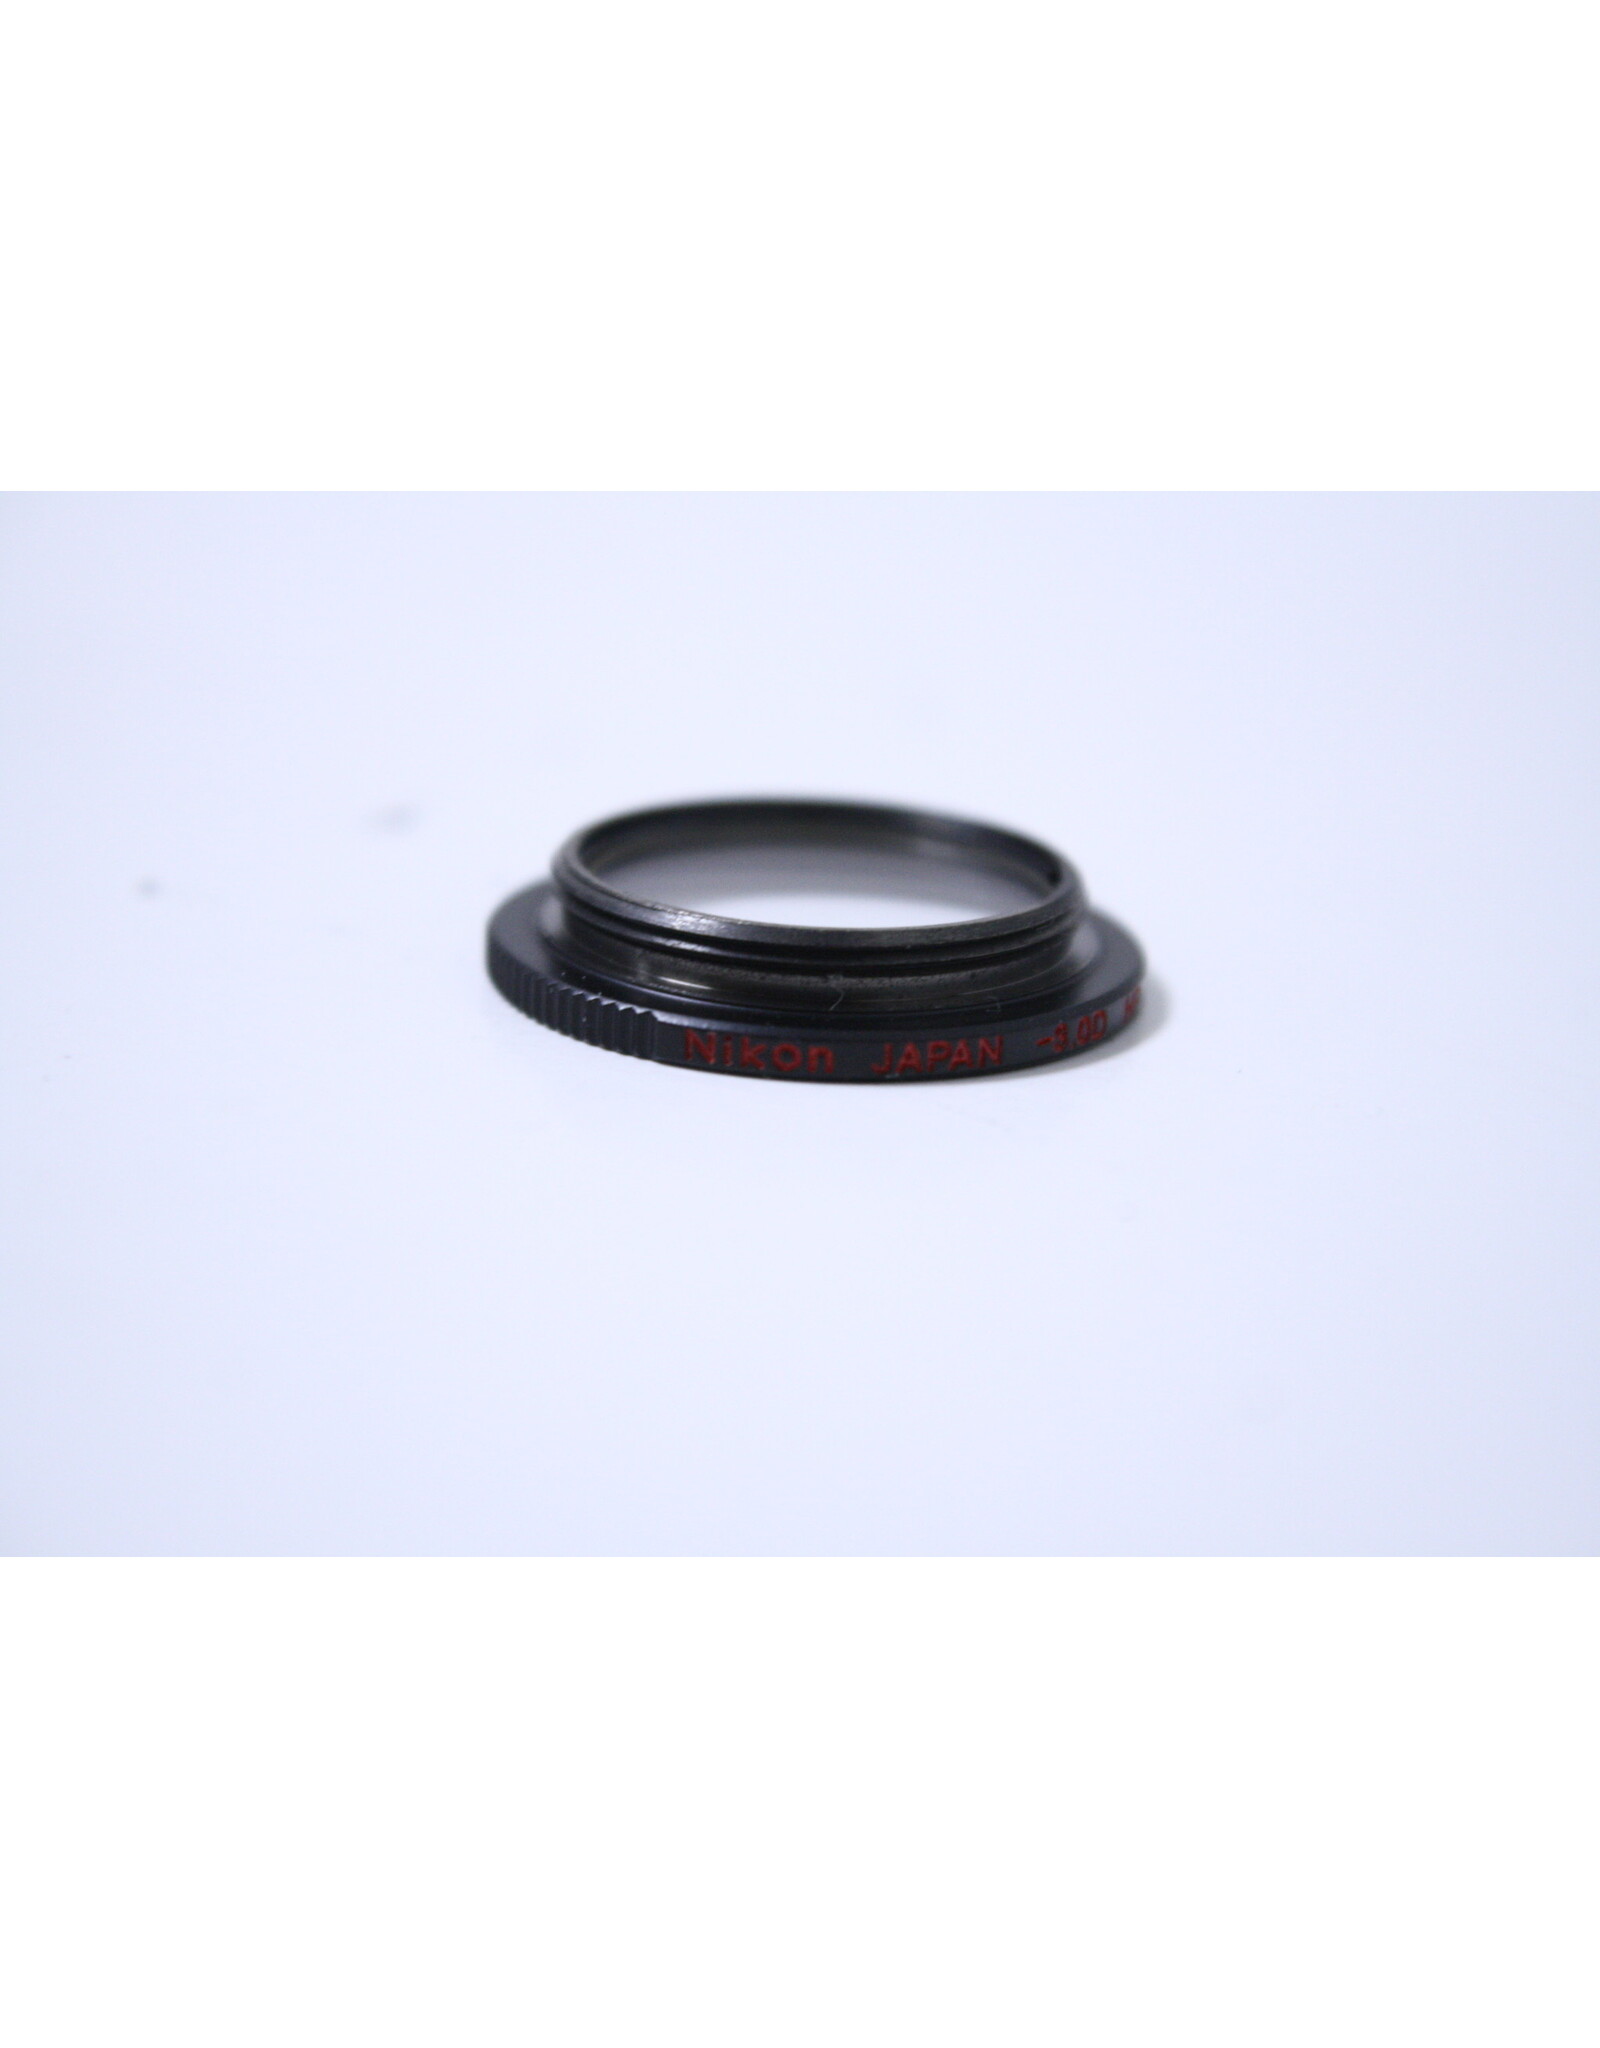 Nikon -3.0 Eyepiece Correction Lens for F4/F3HP